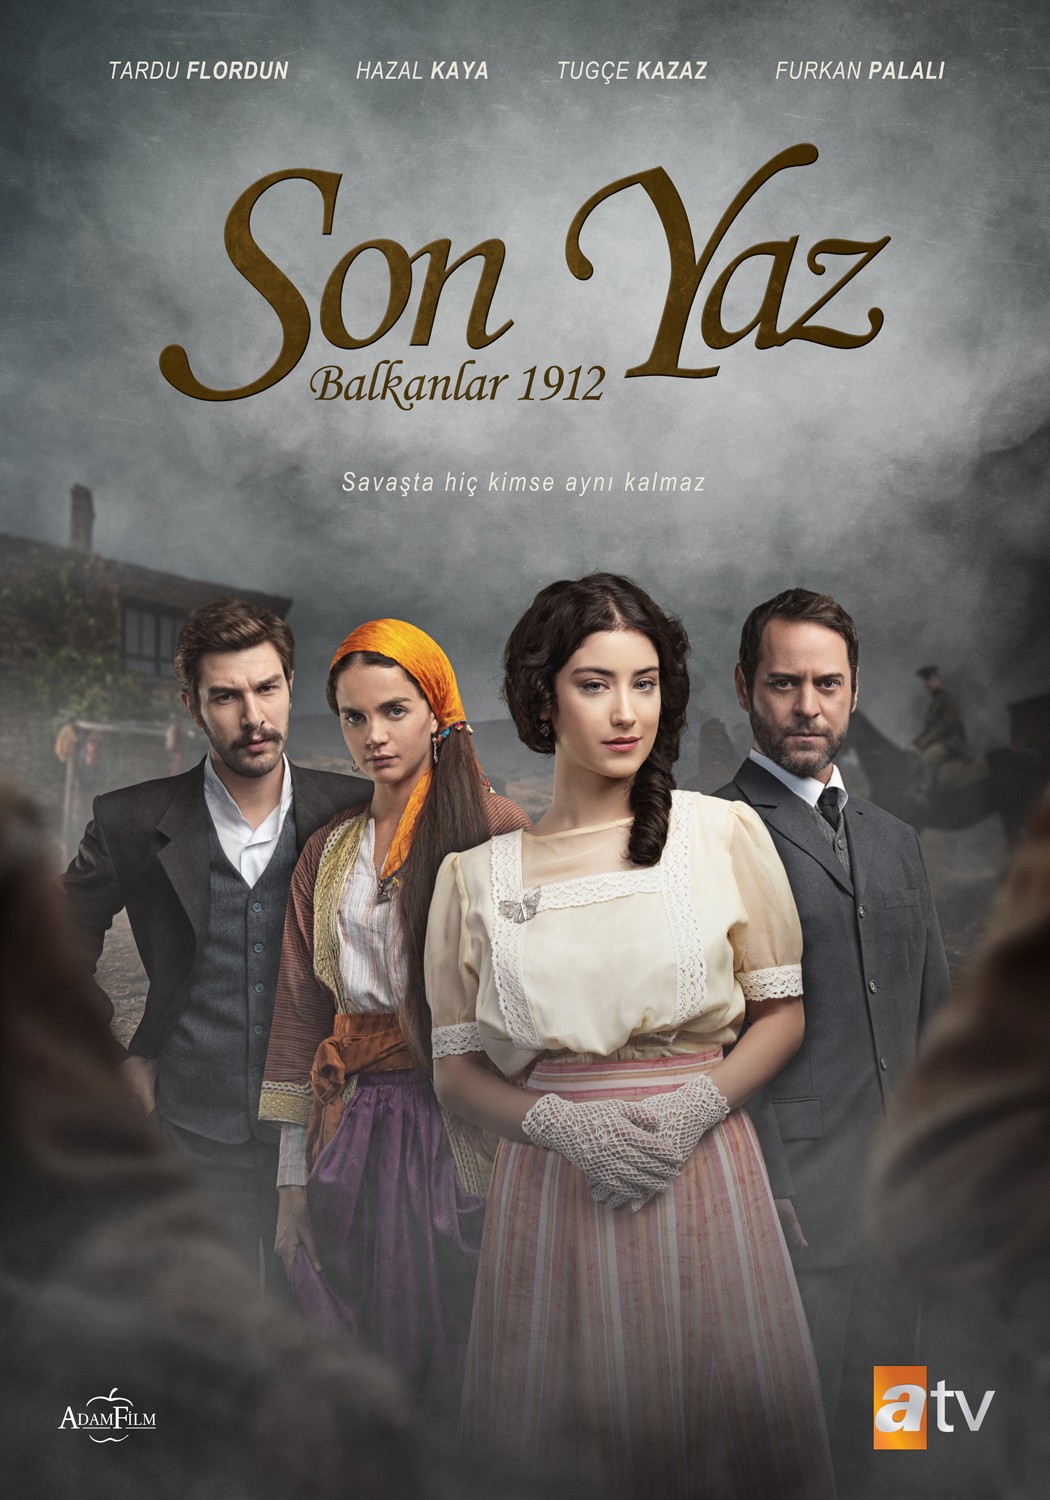 Extra Large TV Poster Image for Son Yaz Balkanlar 1912 